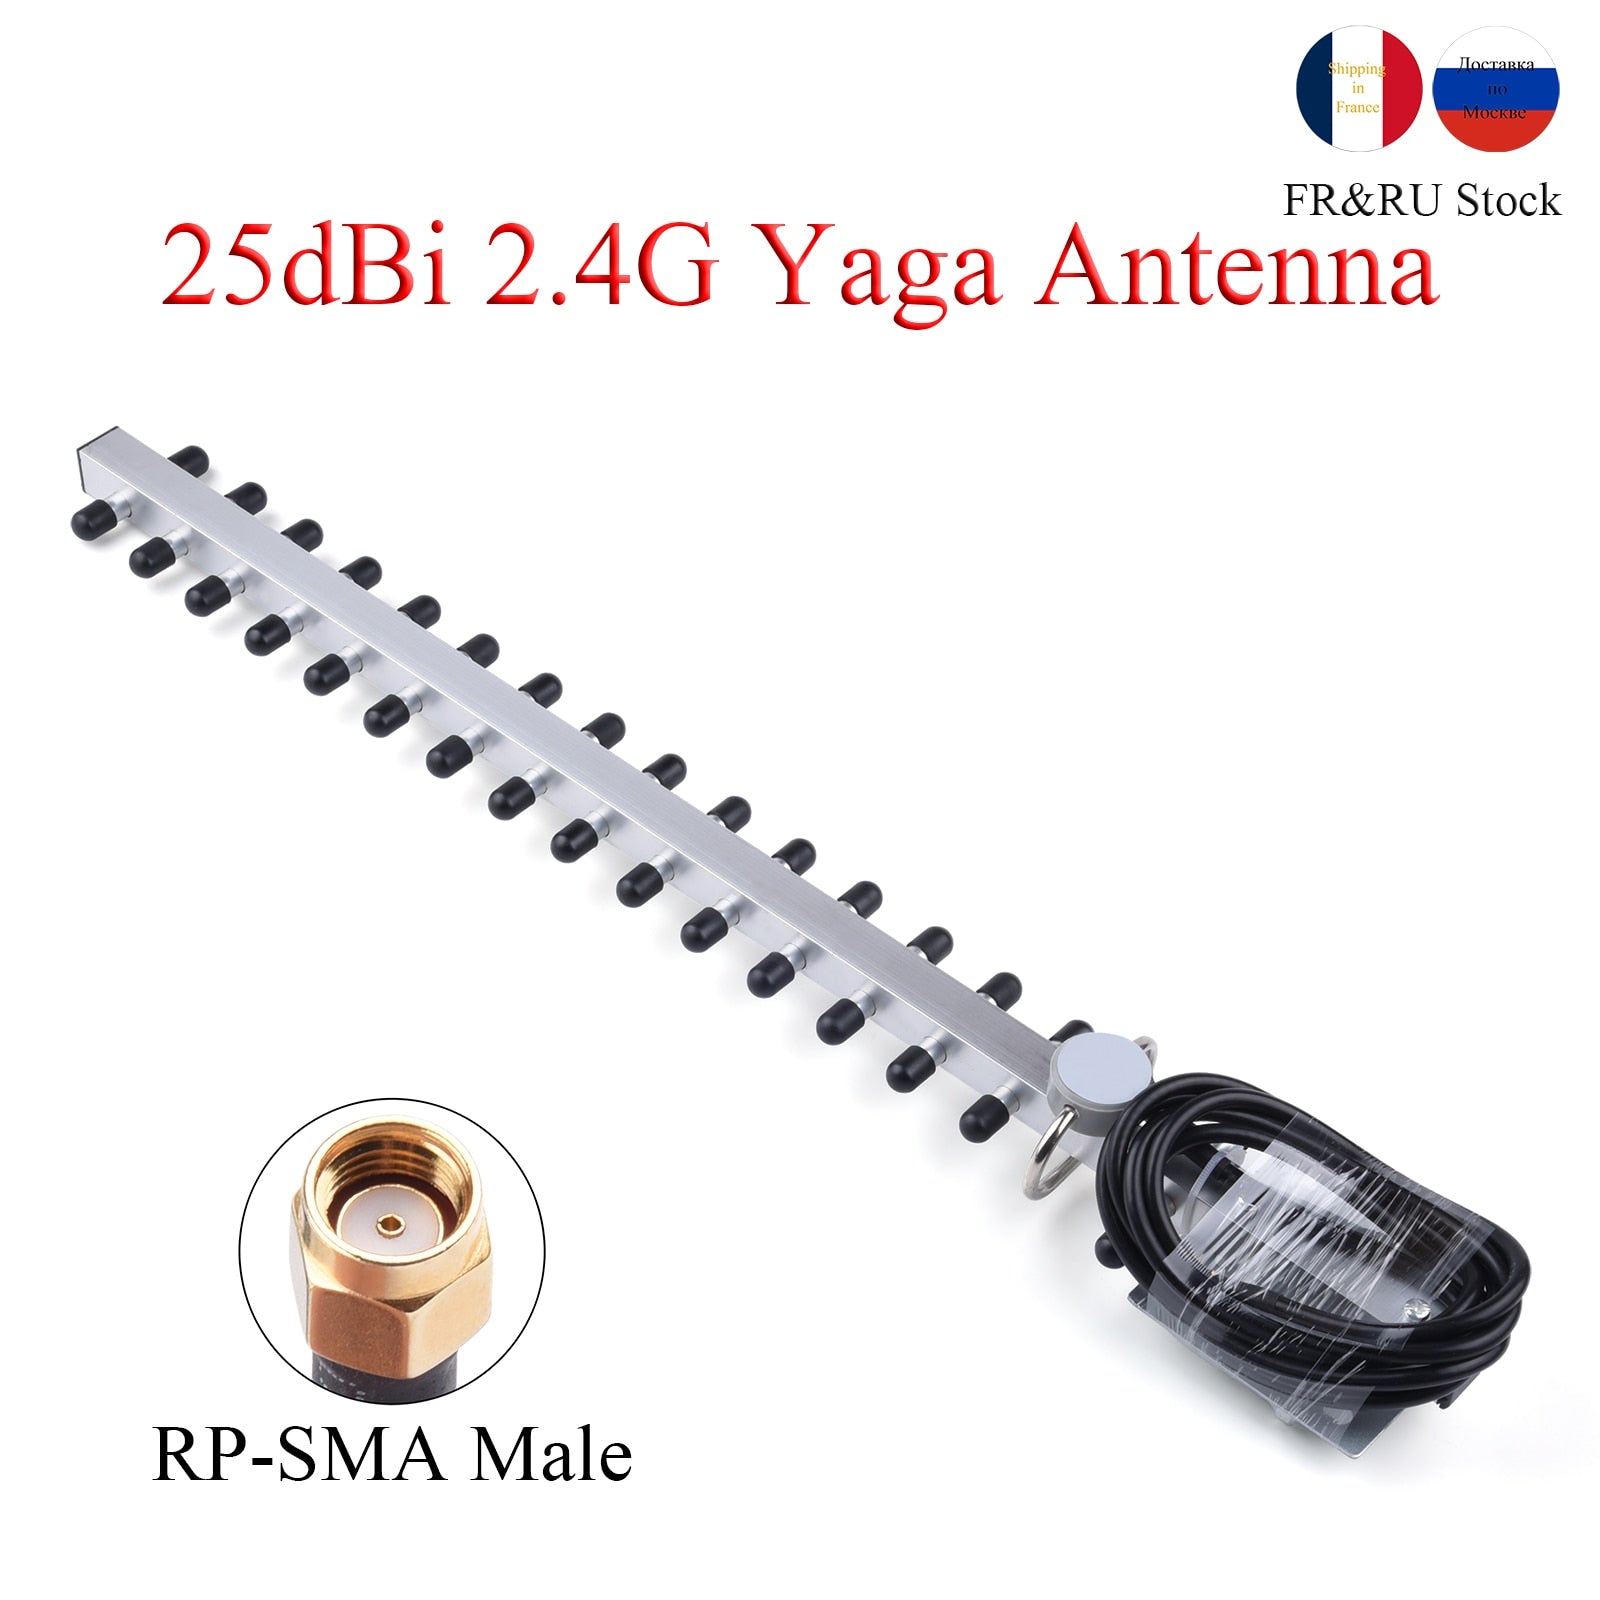 FR&RU Warehouse 2.4G 25dBi Antenna 2400-2500MHz Outdoor Wireless Yagi Antenna RP-SMA Male For Router Booster Amplifier Modem